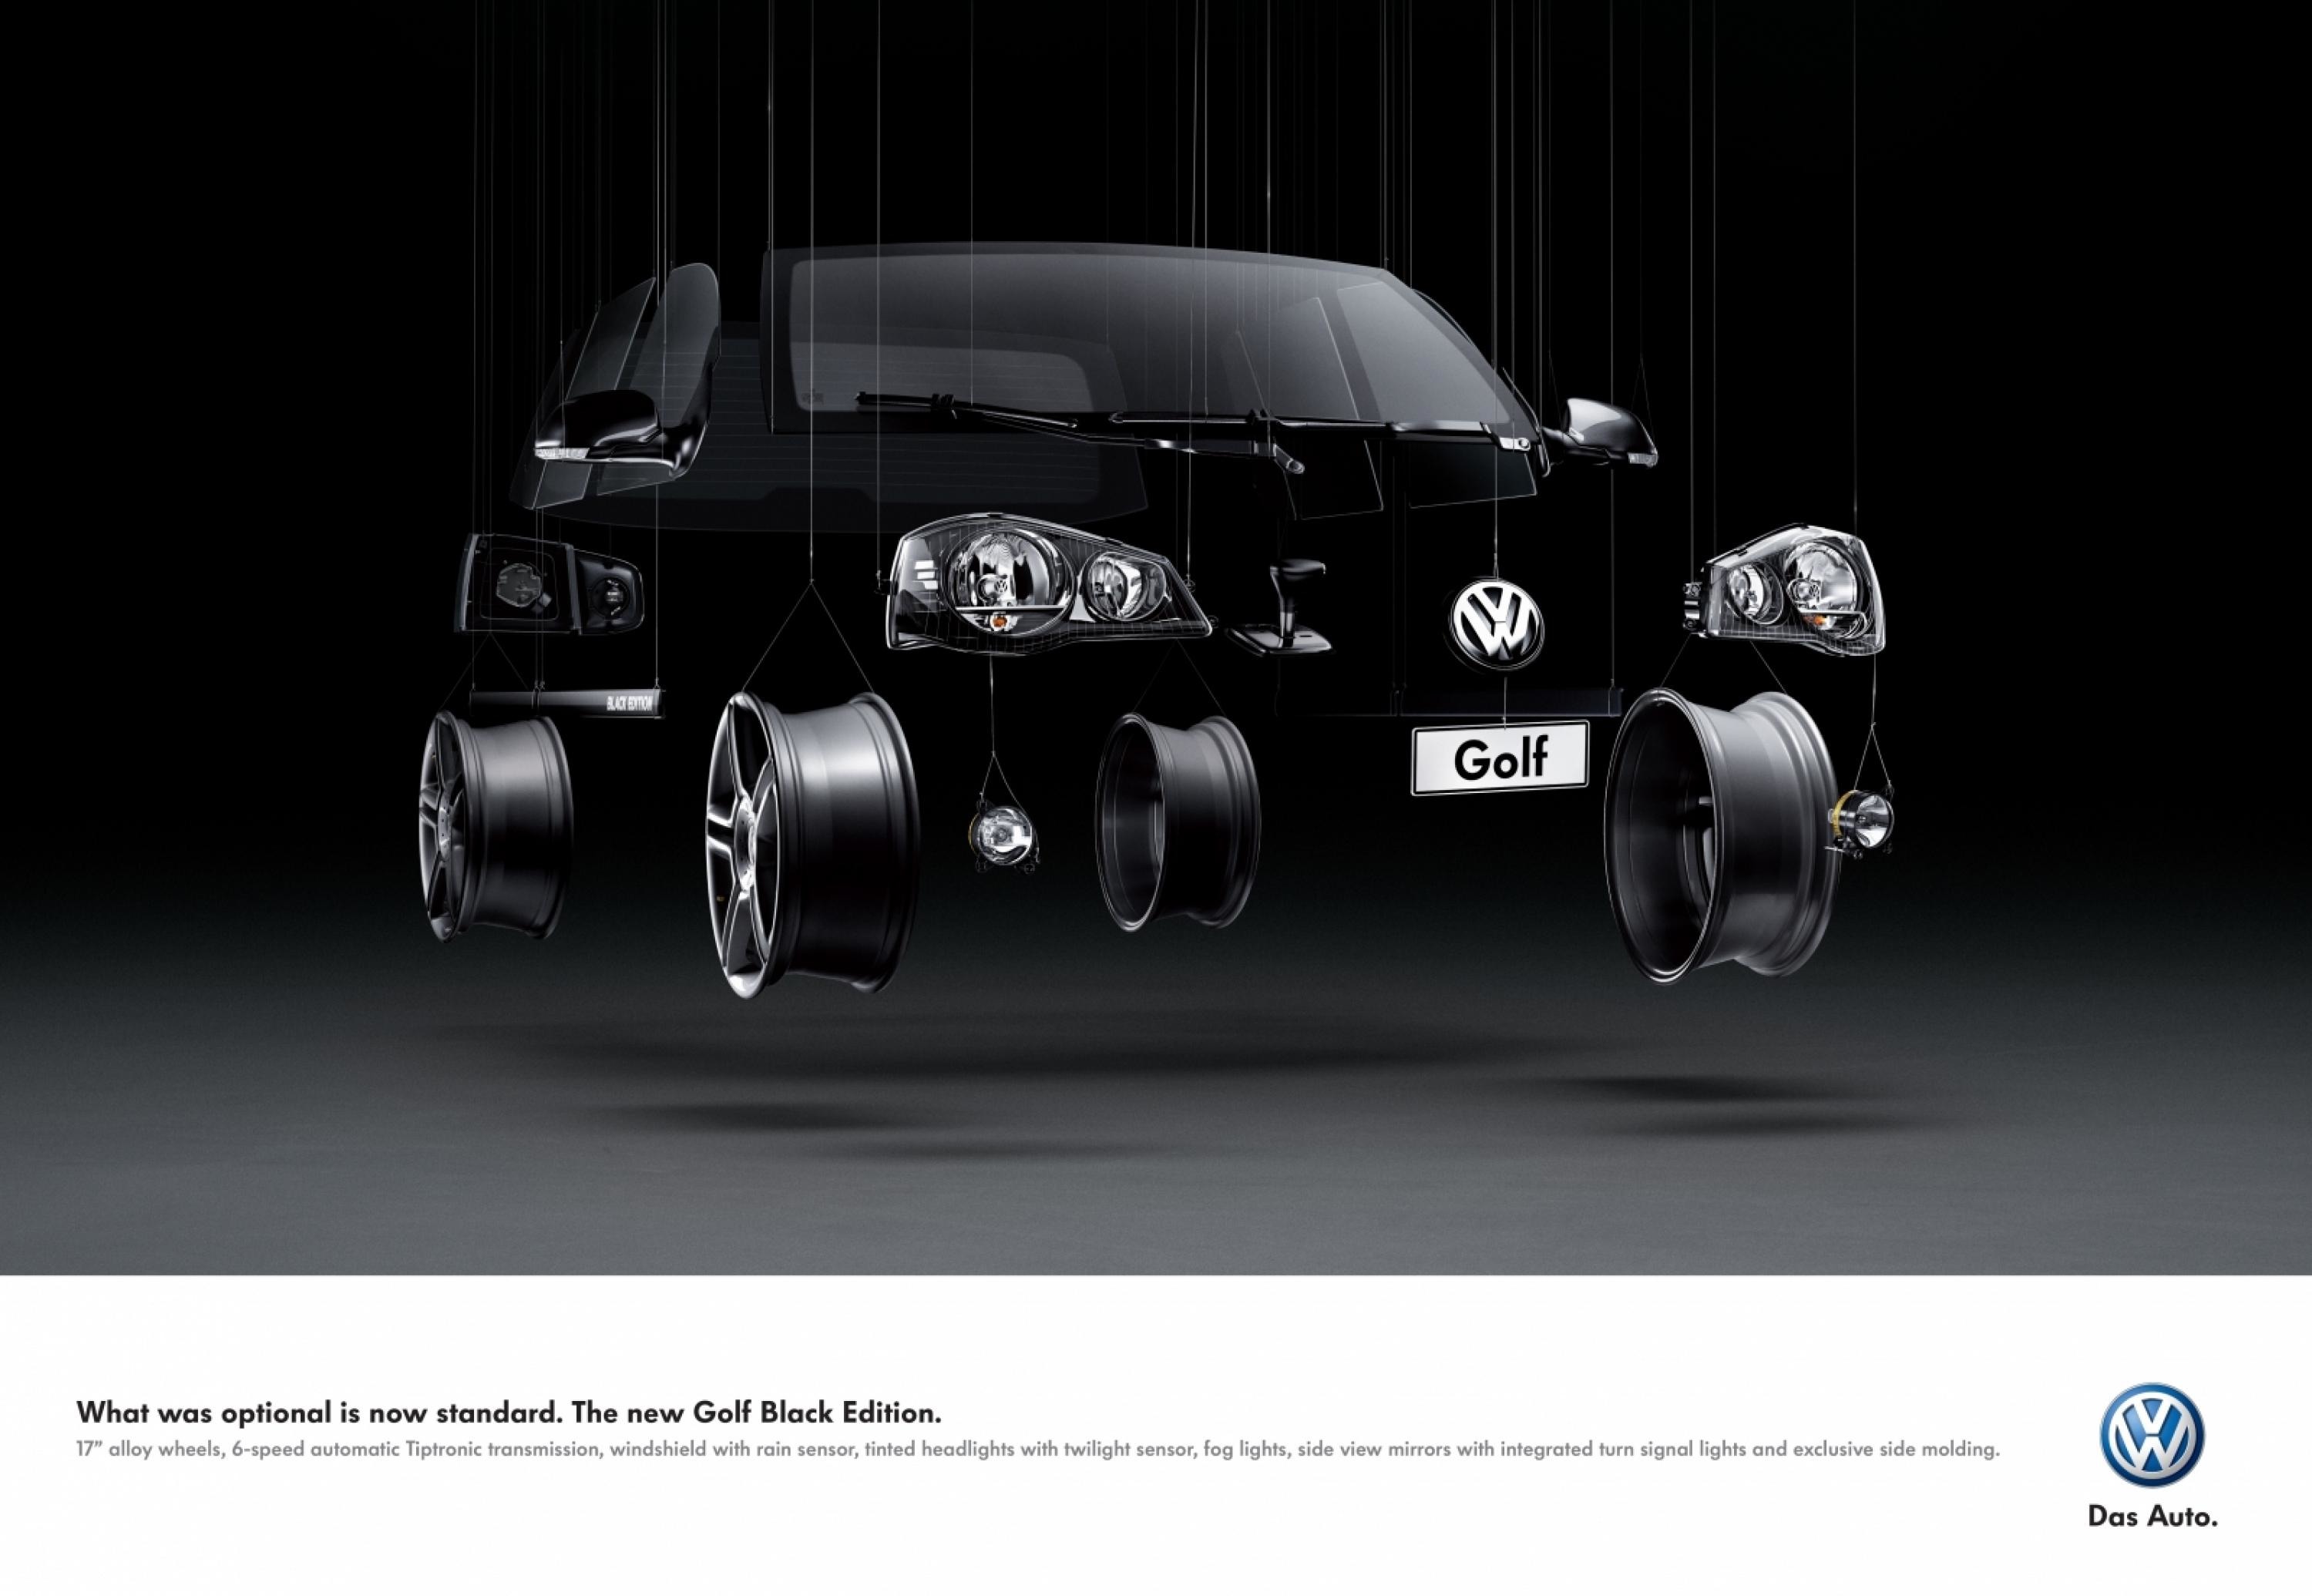 VW GOLF BLACK EDITION